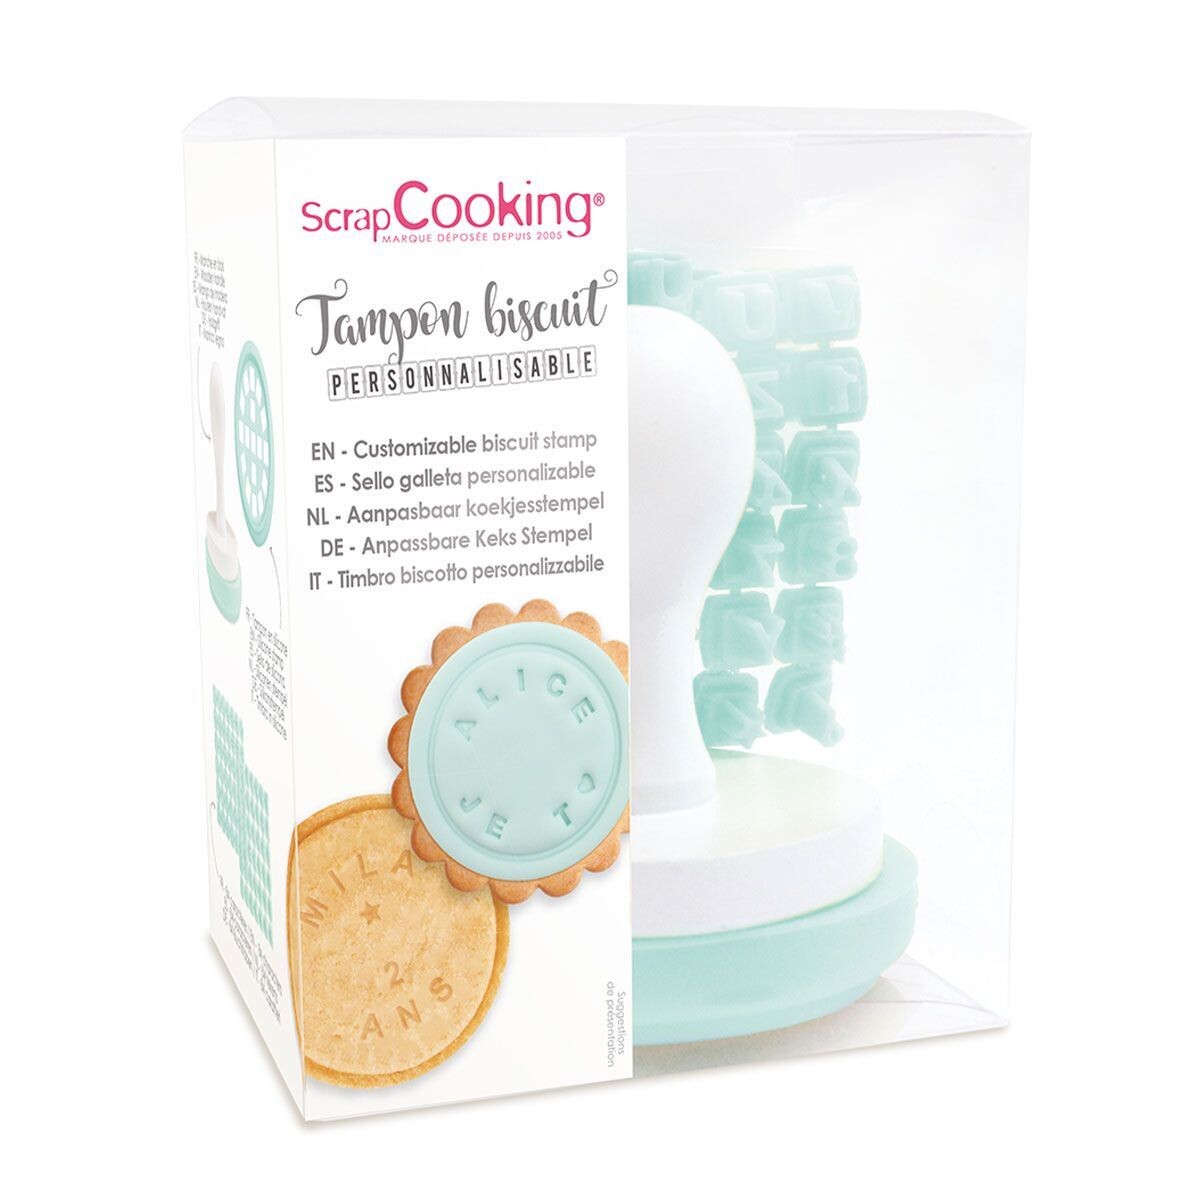 Scrapcooking Cookie Stamp with Customizable pad - Σφραγίδα για Μπισκότα με Προσωποποιημένο Μήνυμα